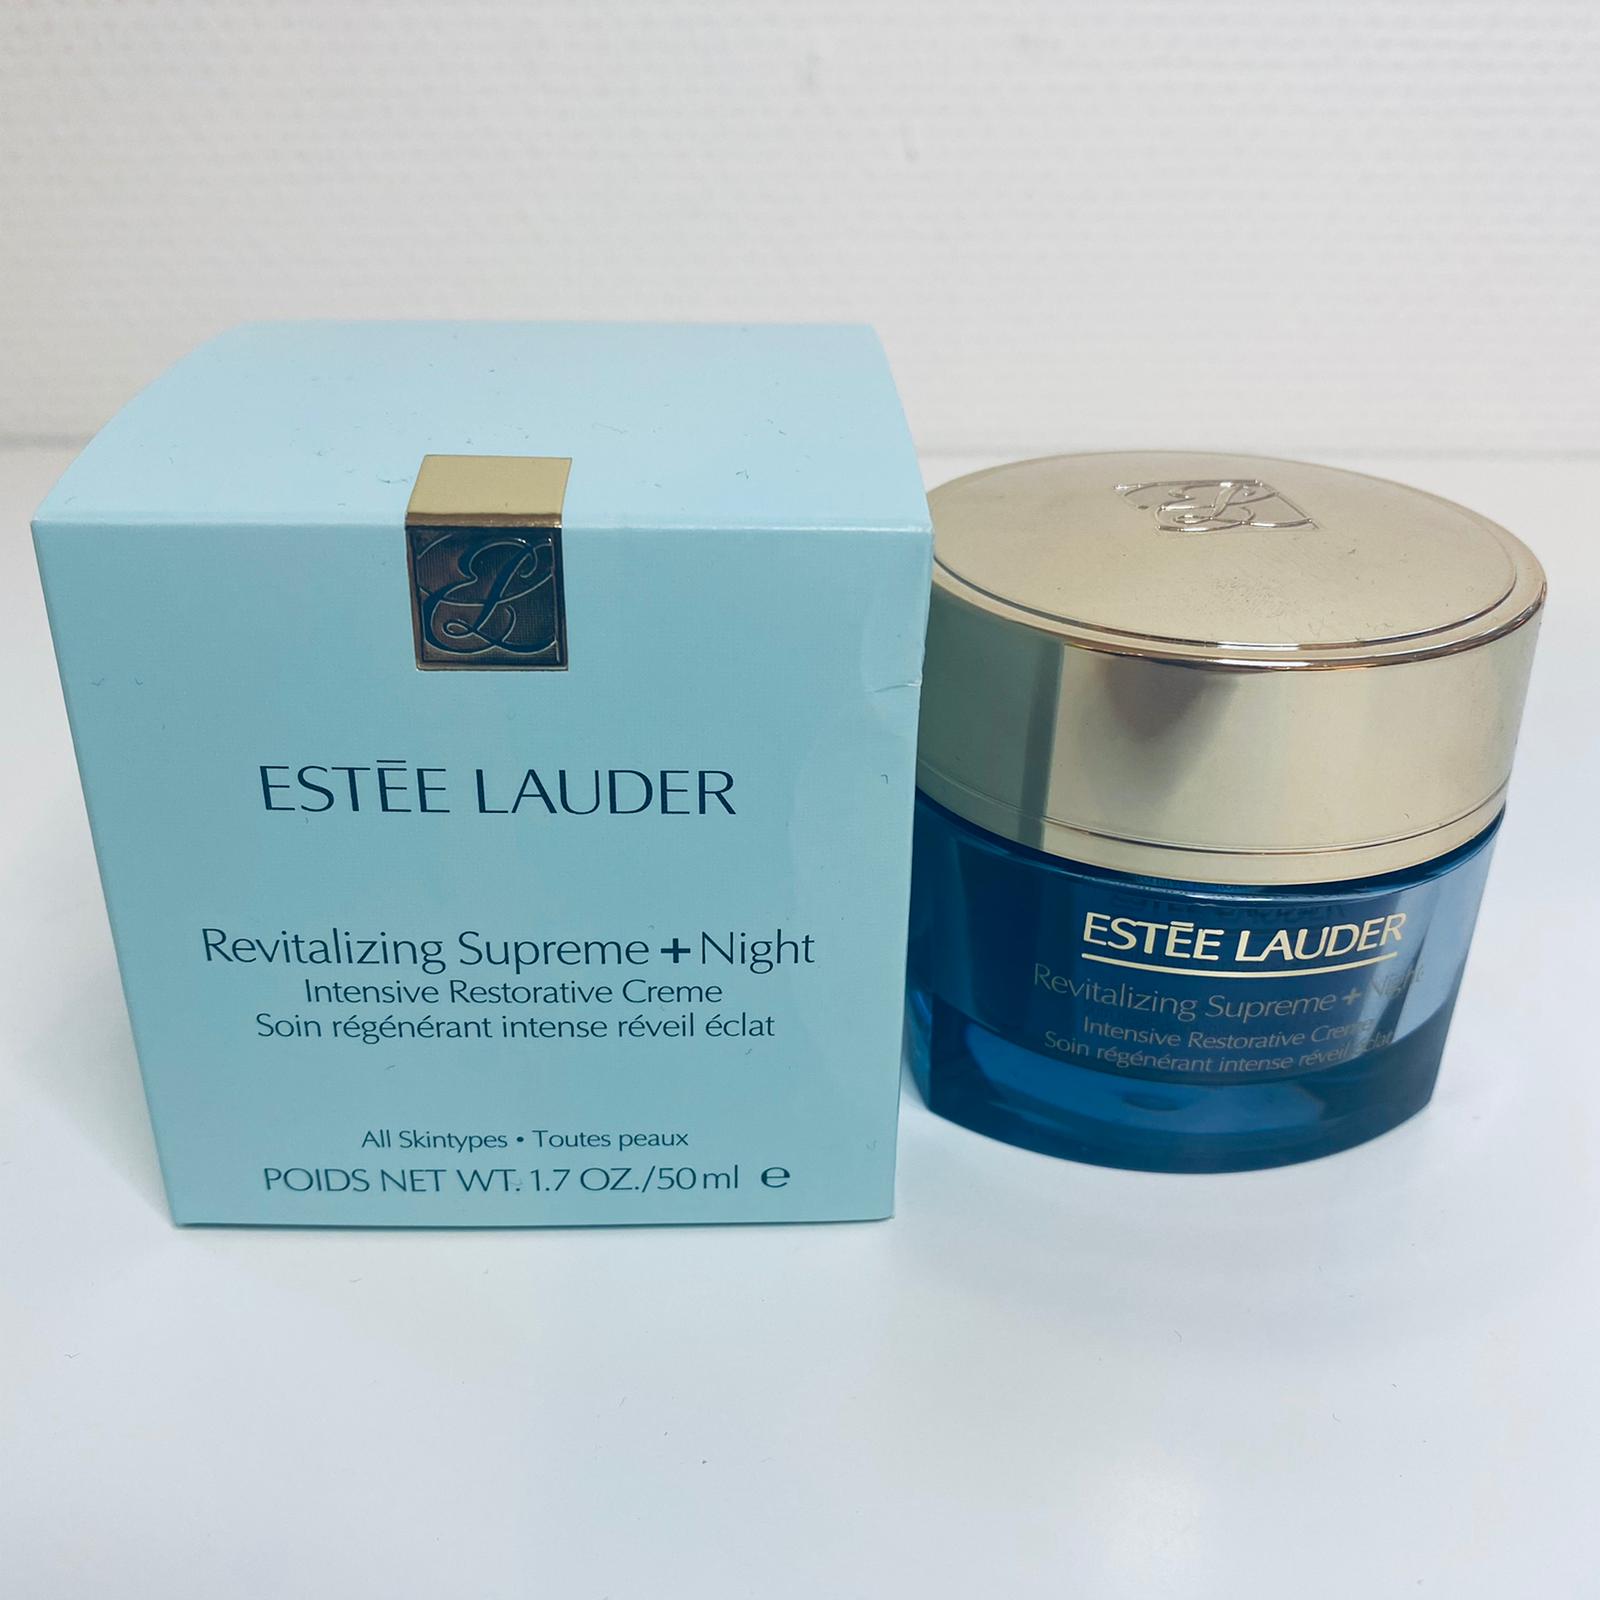 Estee Lauder revitalizing supreme + night all skintypes 50 ml